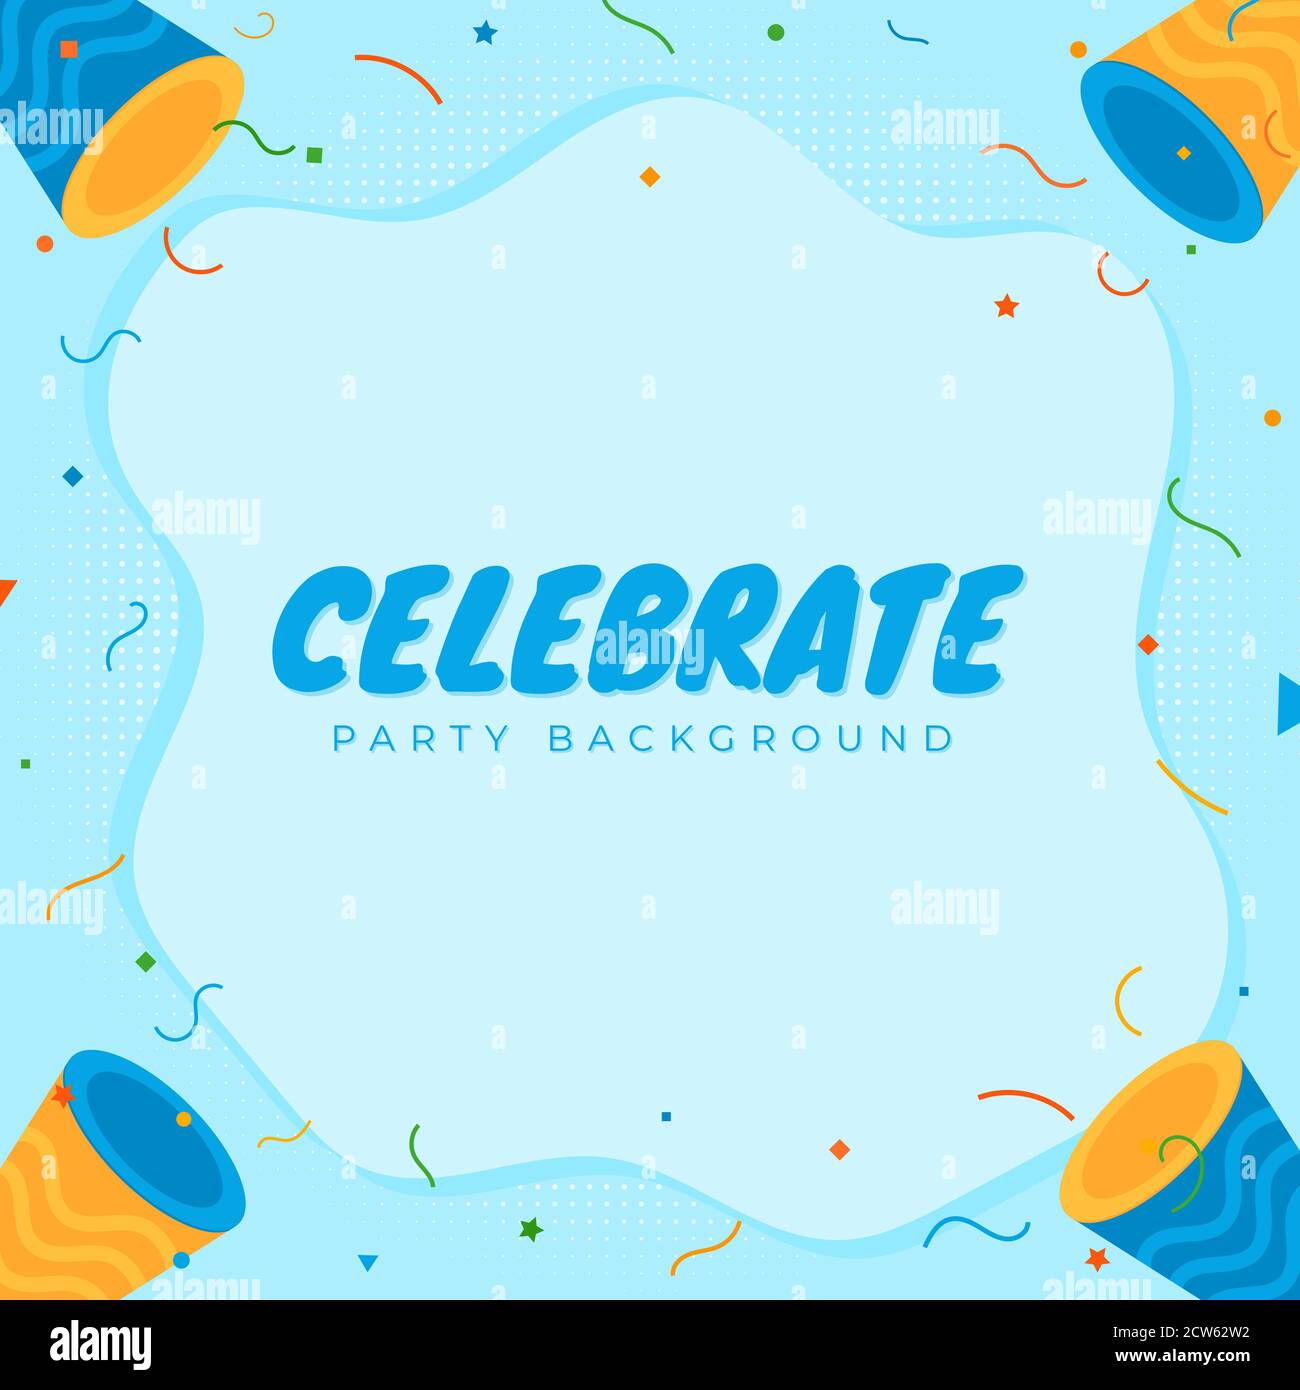 Celebrate party background blue geometric shape fall design. vector illustration. Stock Vector